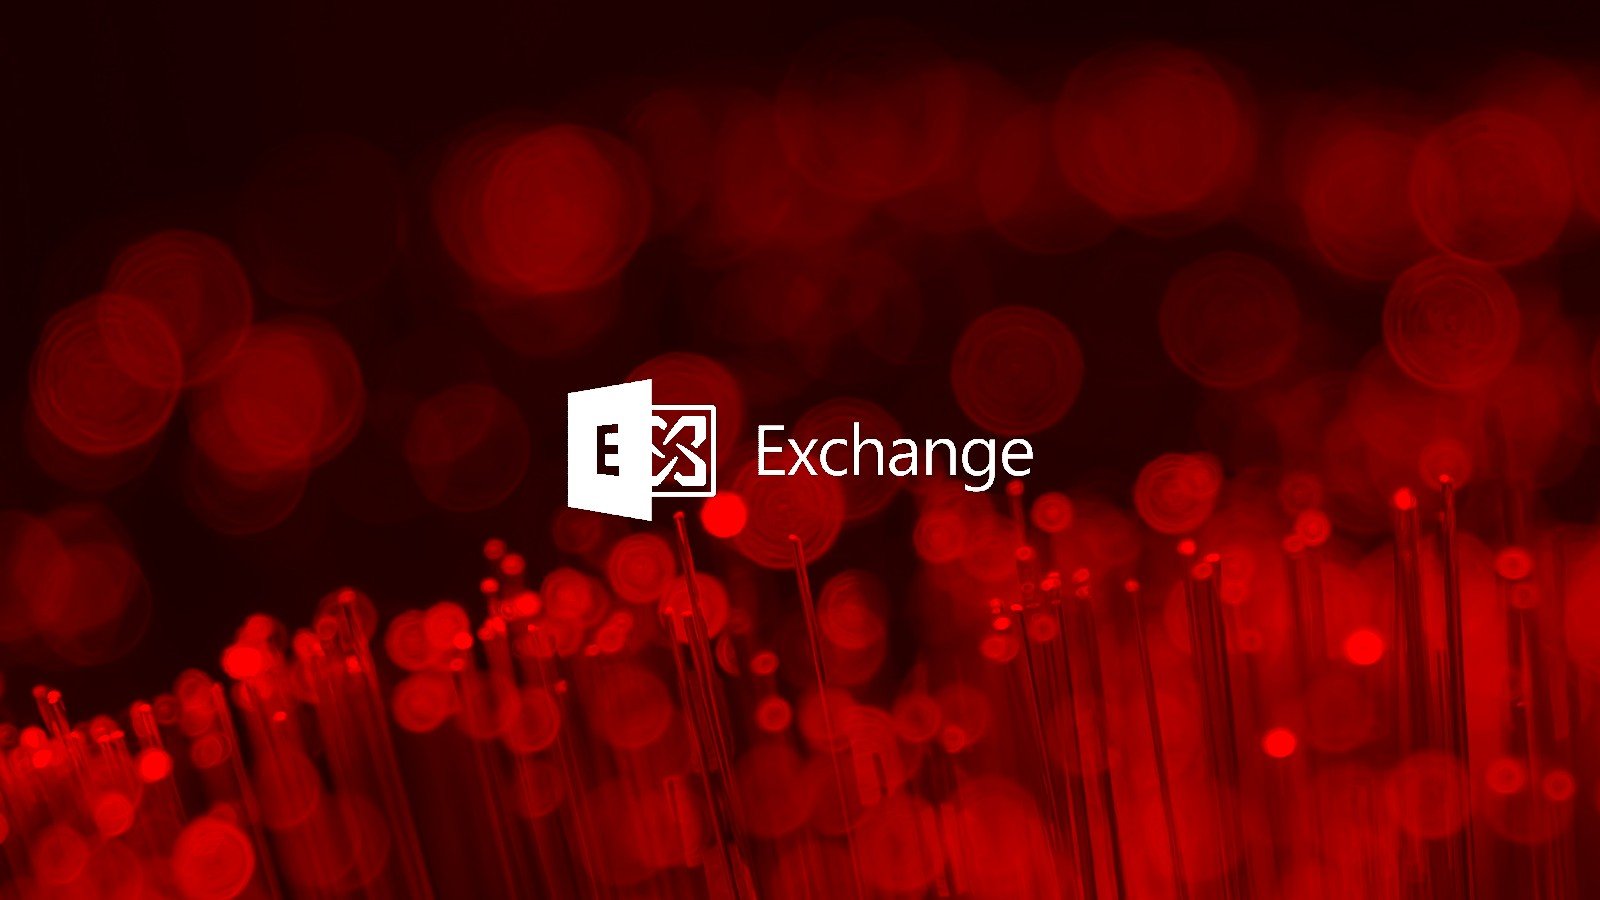 Microsoft: IIS extensions increasingly used as Exchange backdoors